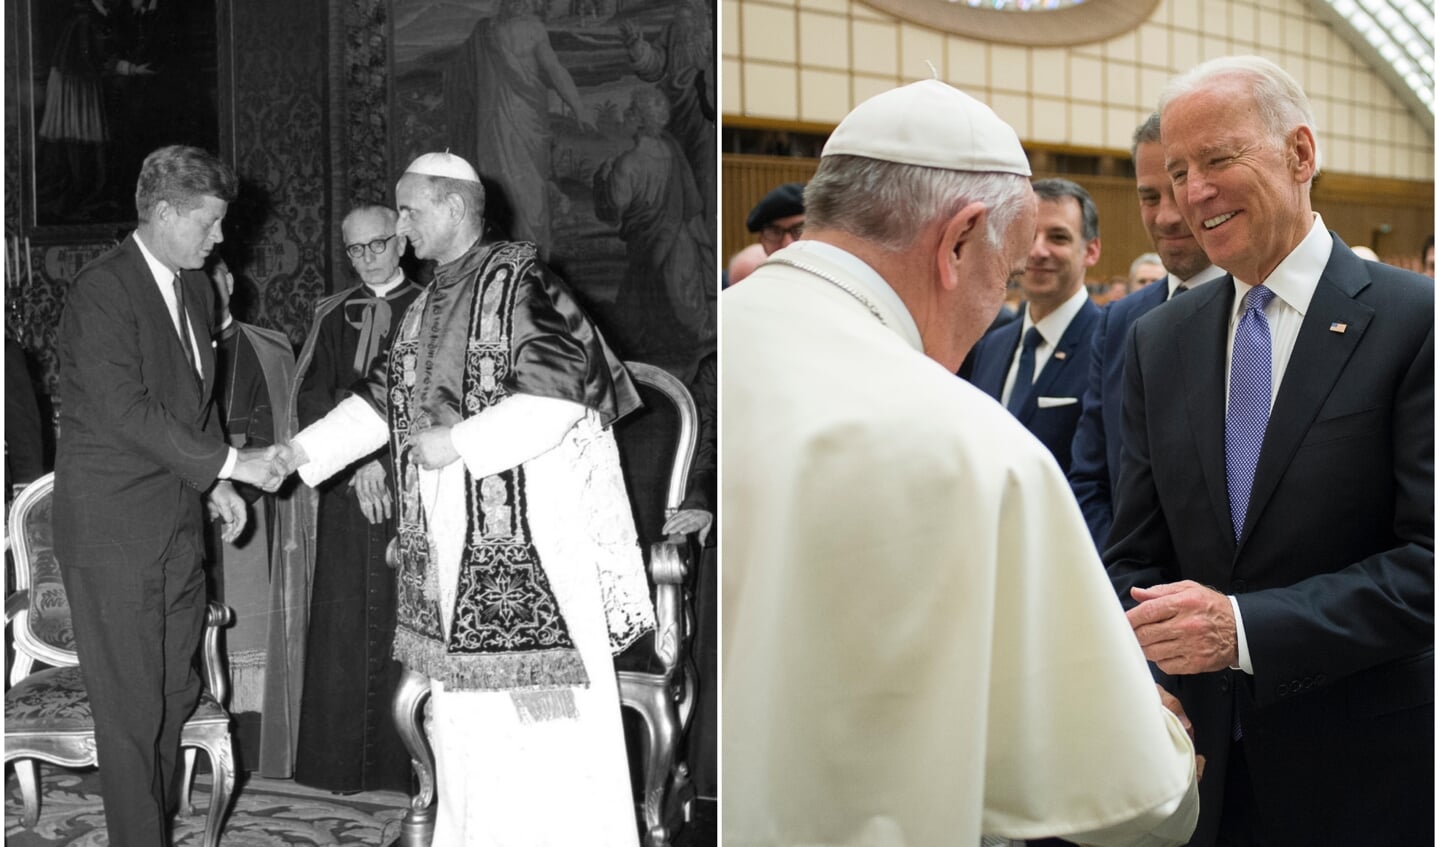 Links: Kennedy ontmoet paus Paulus VI op 2 juli 1963. Rechts: Biden ontmoet paus Franciscus op 29 april 2016.